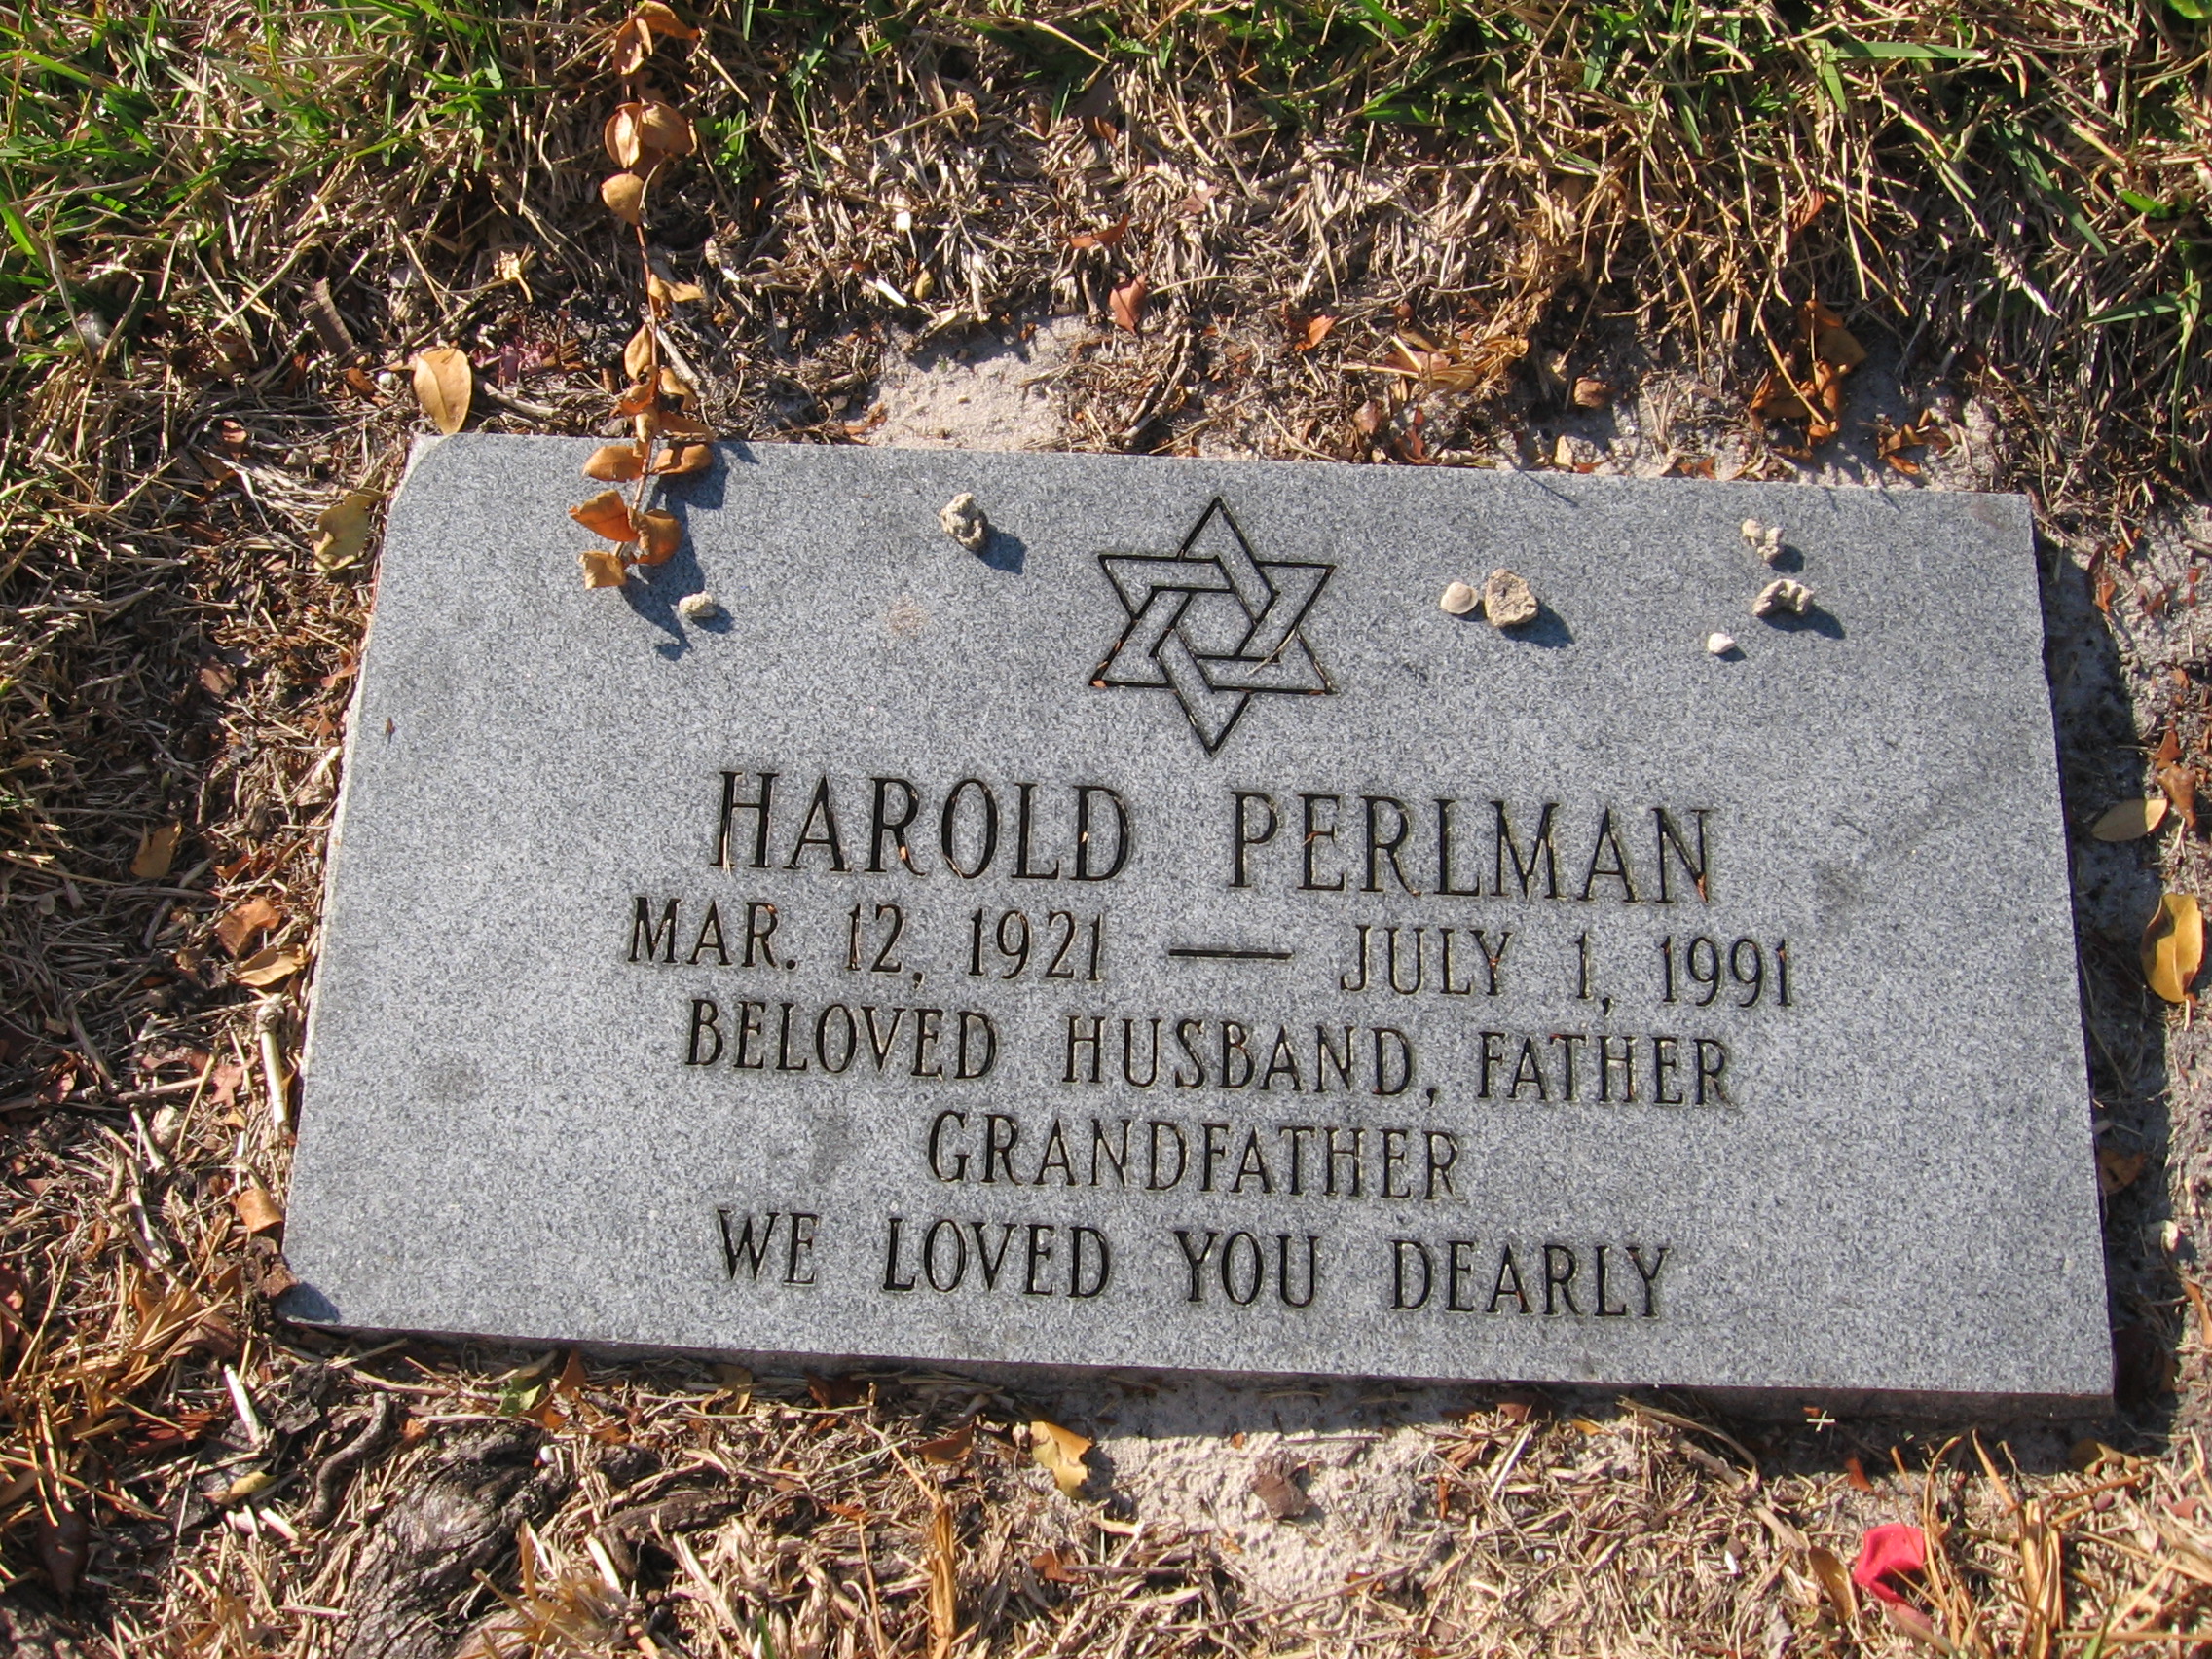 Harold Perlman